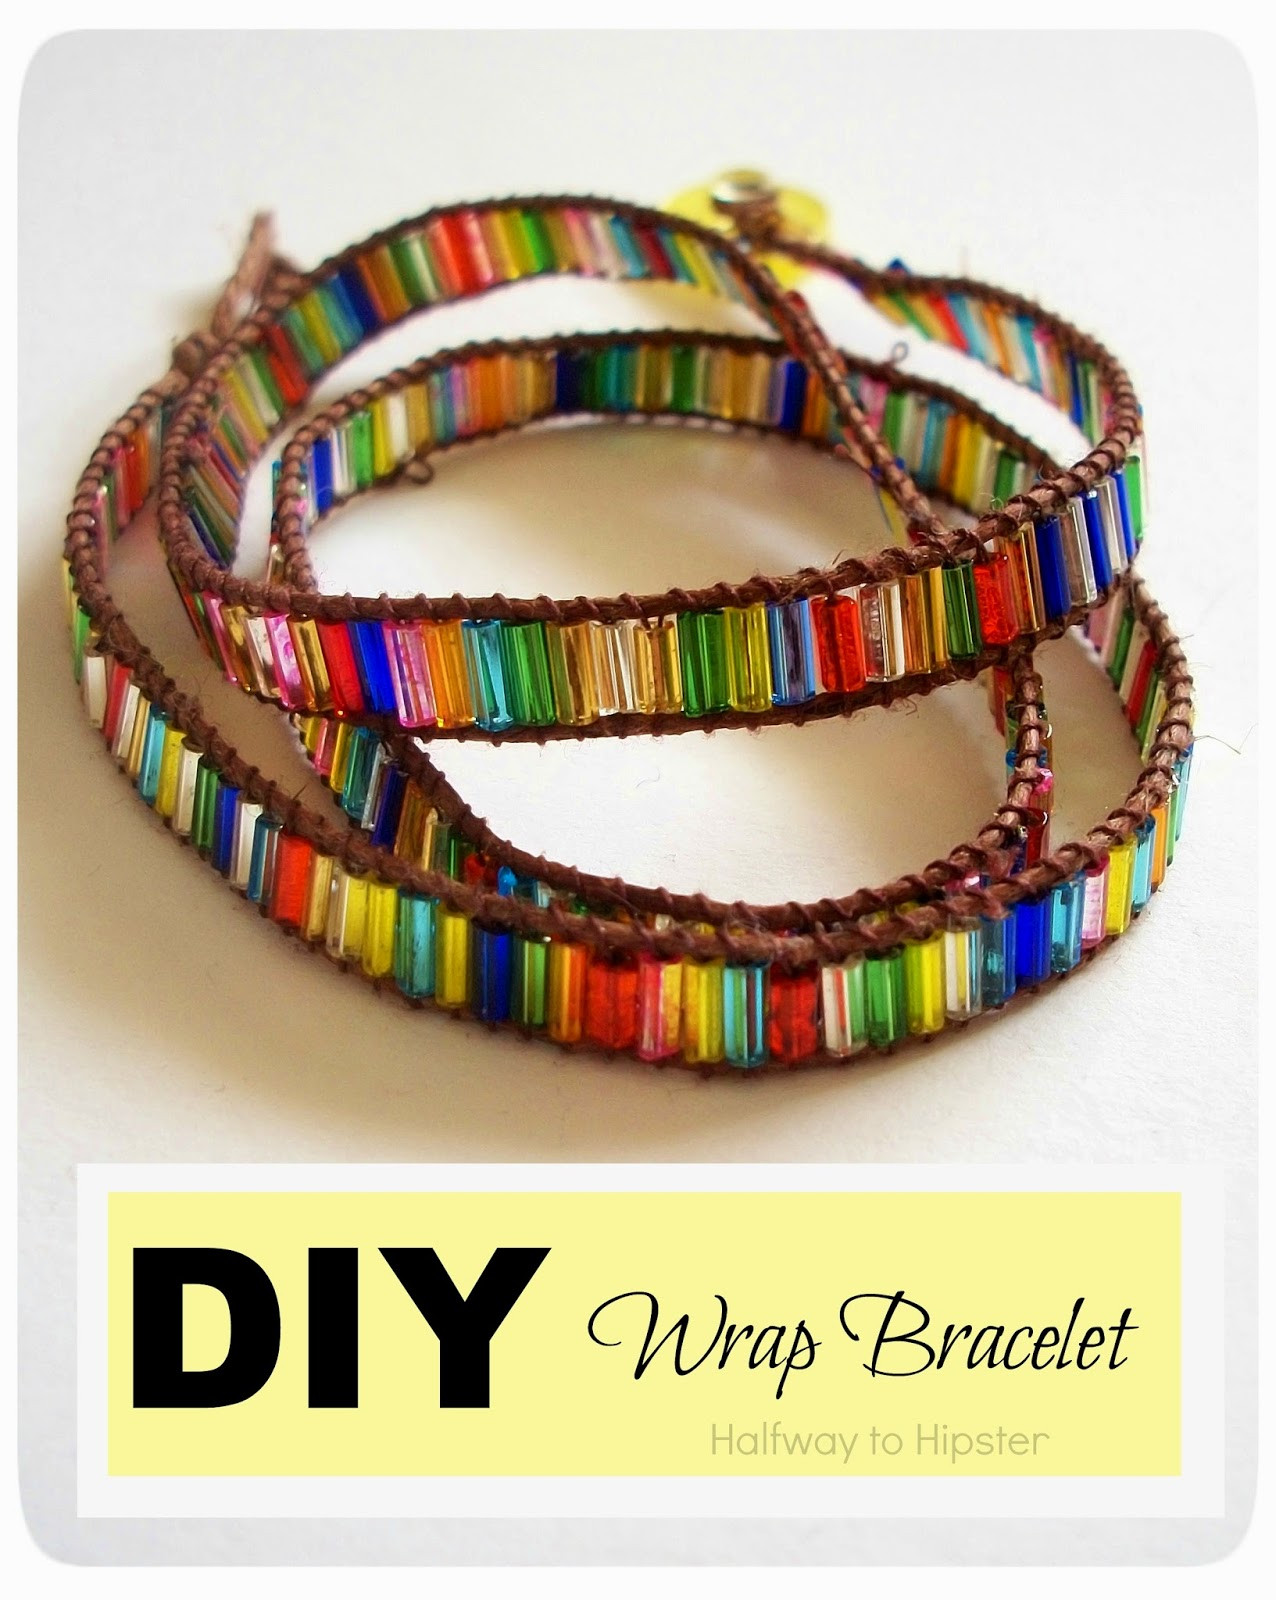 Best ideas about DIY Wrap Bracelet
. Save or Pin Halfway To Hipster DIY Wrap Bracelet Now.